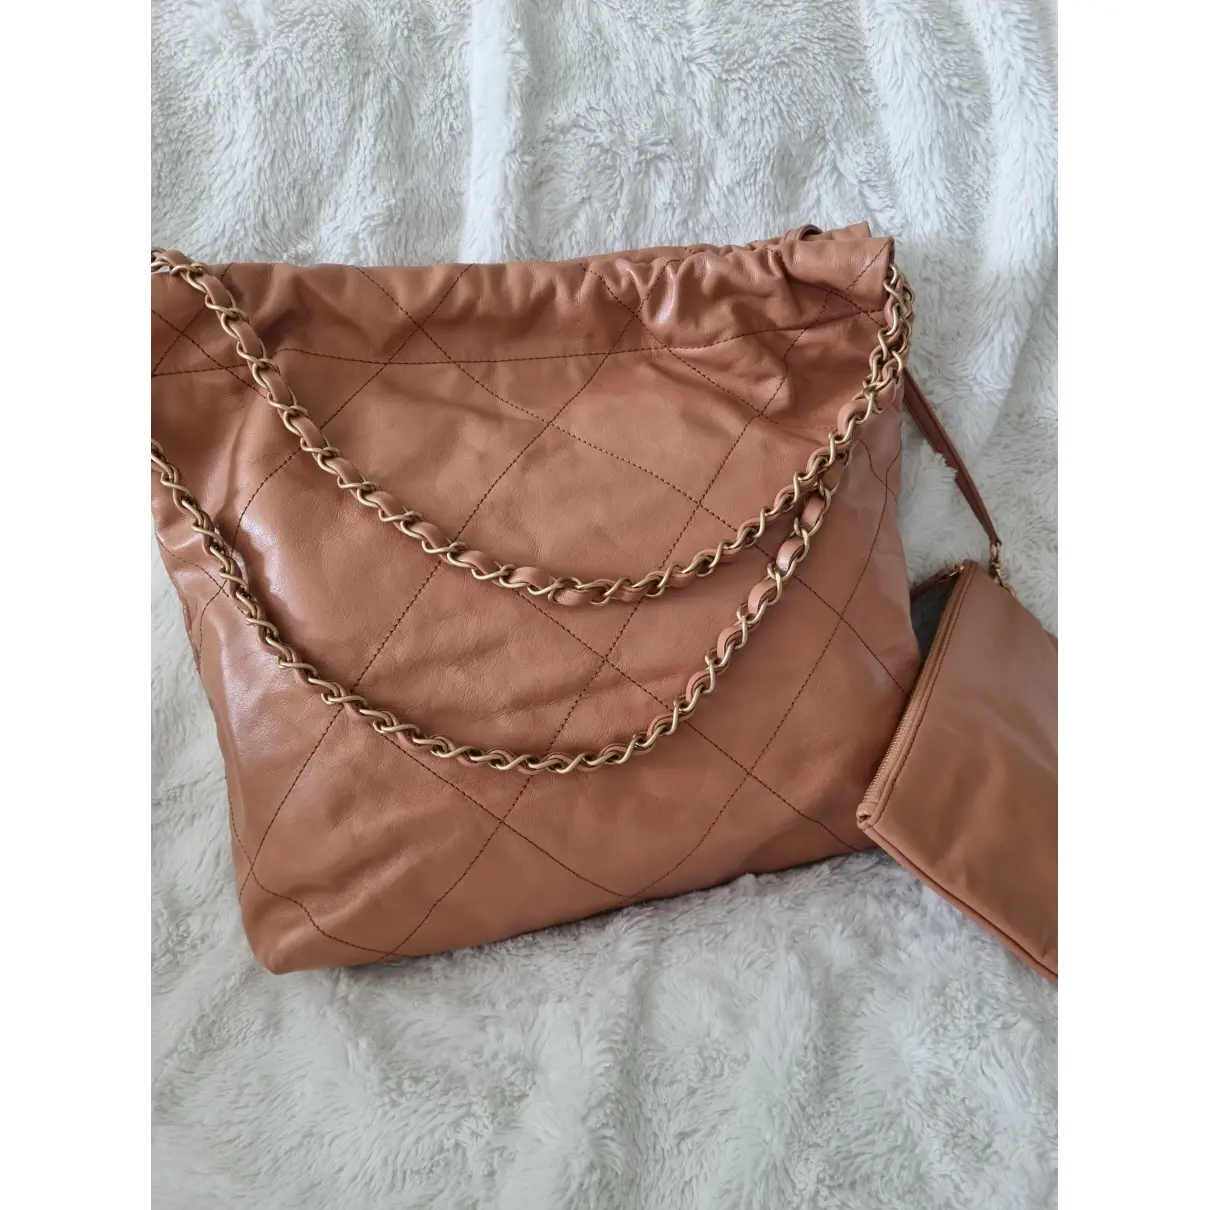 Chanel 22 leather handbag Chanel